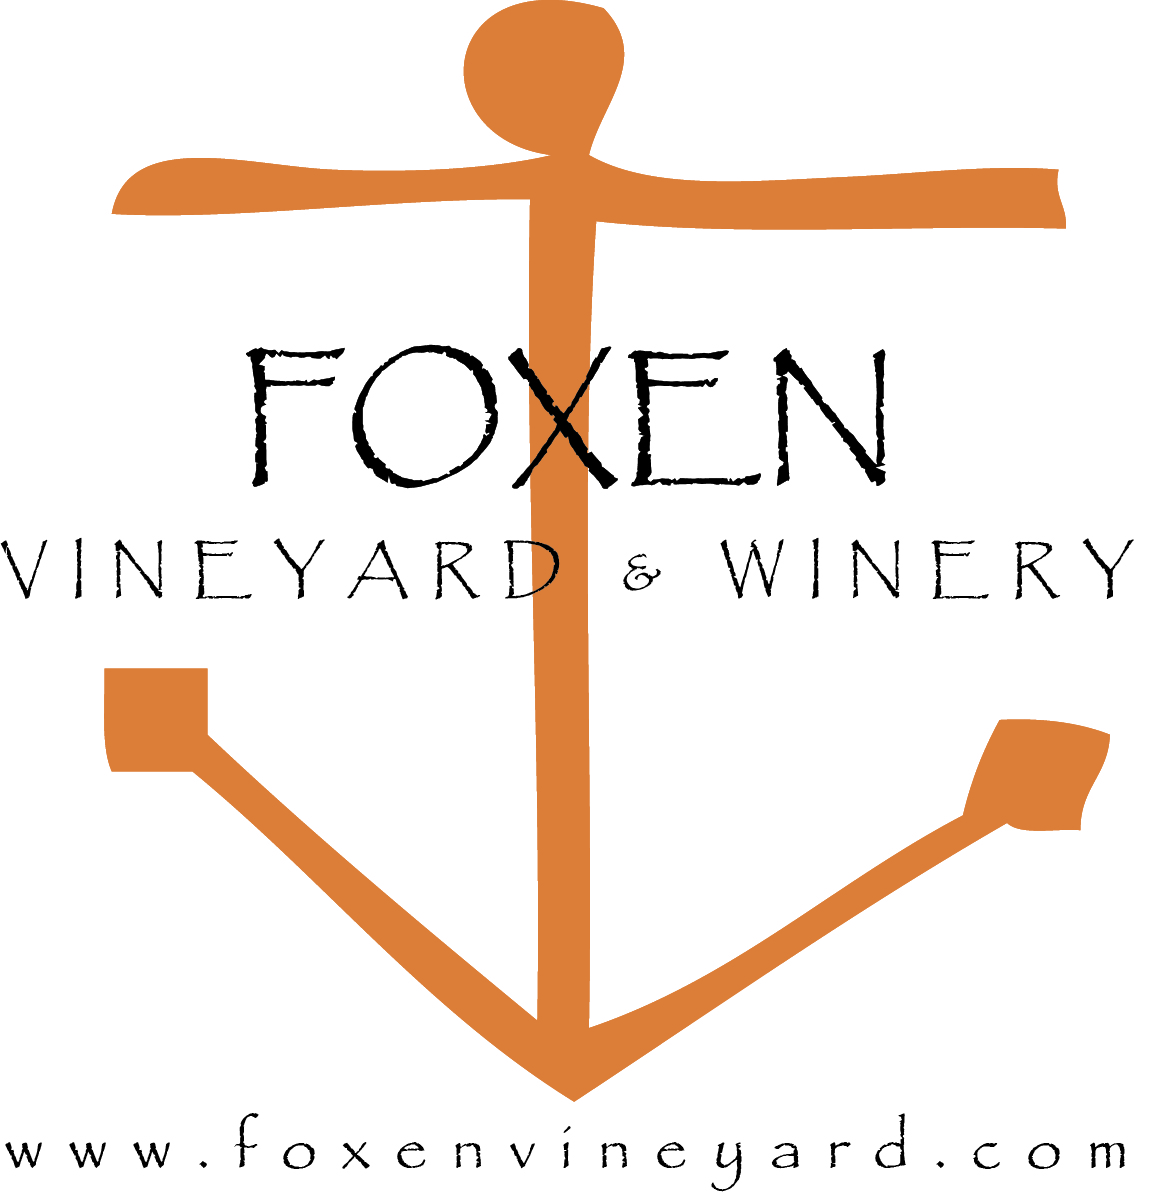 FOXEN Library Wine Weekend